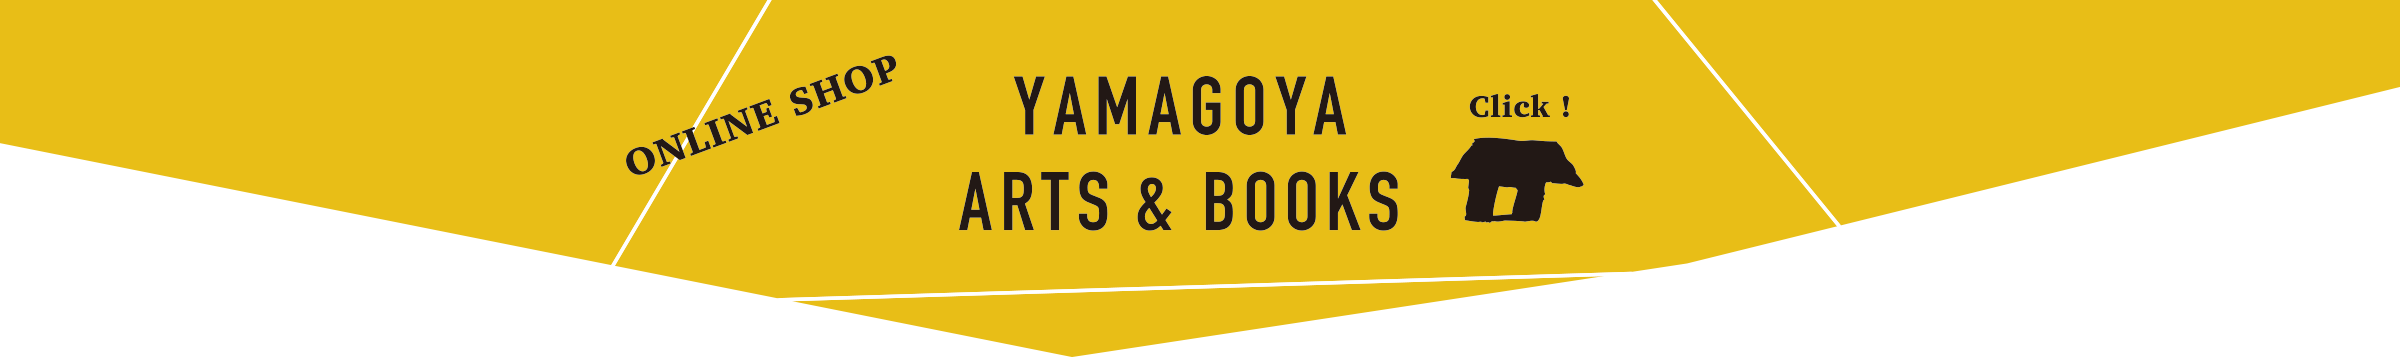 YAMAGOYA ARTS & BOOKS ONLINE SHOP